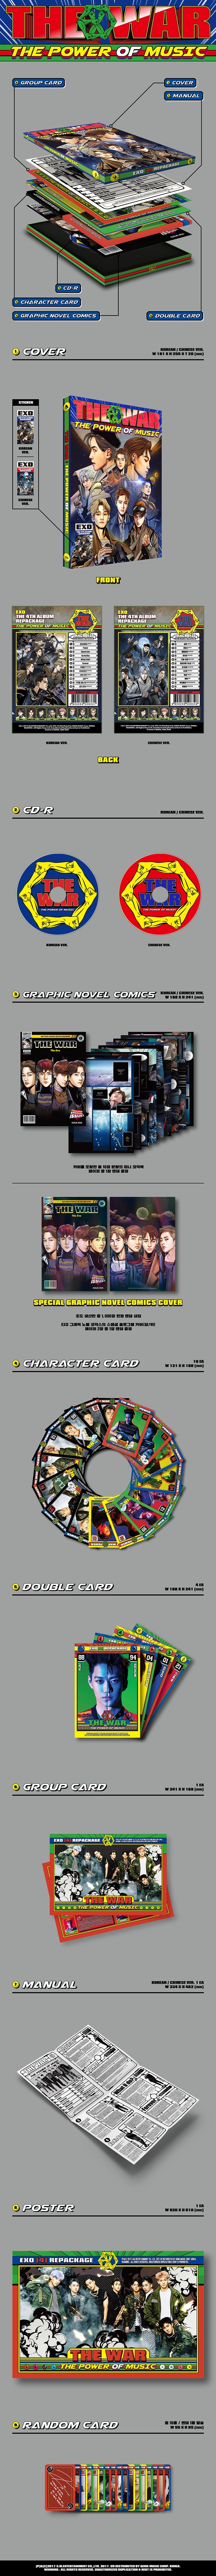 1 CD
1 Graphic Novel Comics
1 Character Cards
1 Double Cards
1 Group Card
1 Manual
1 Random Card